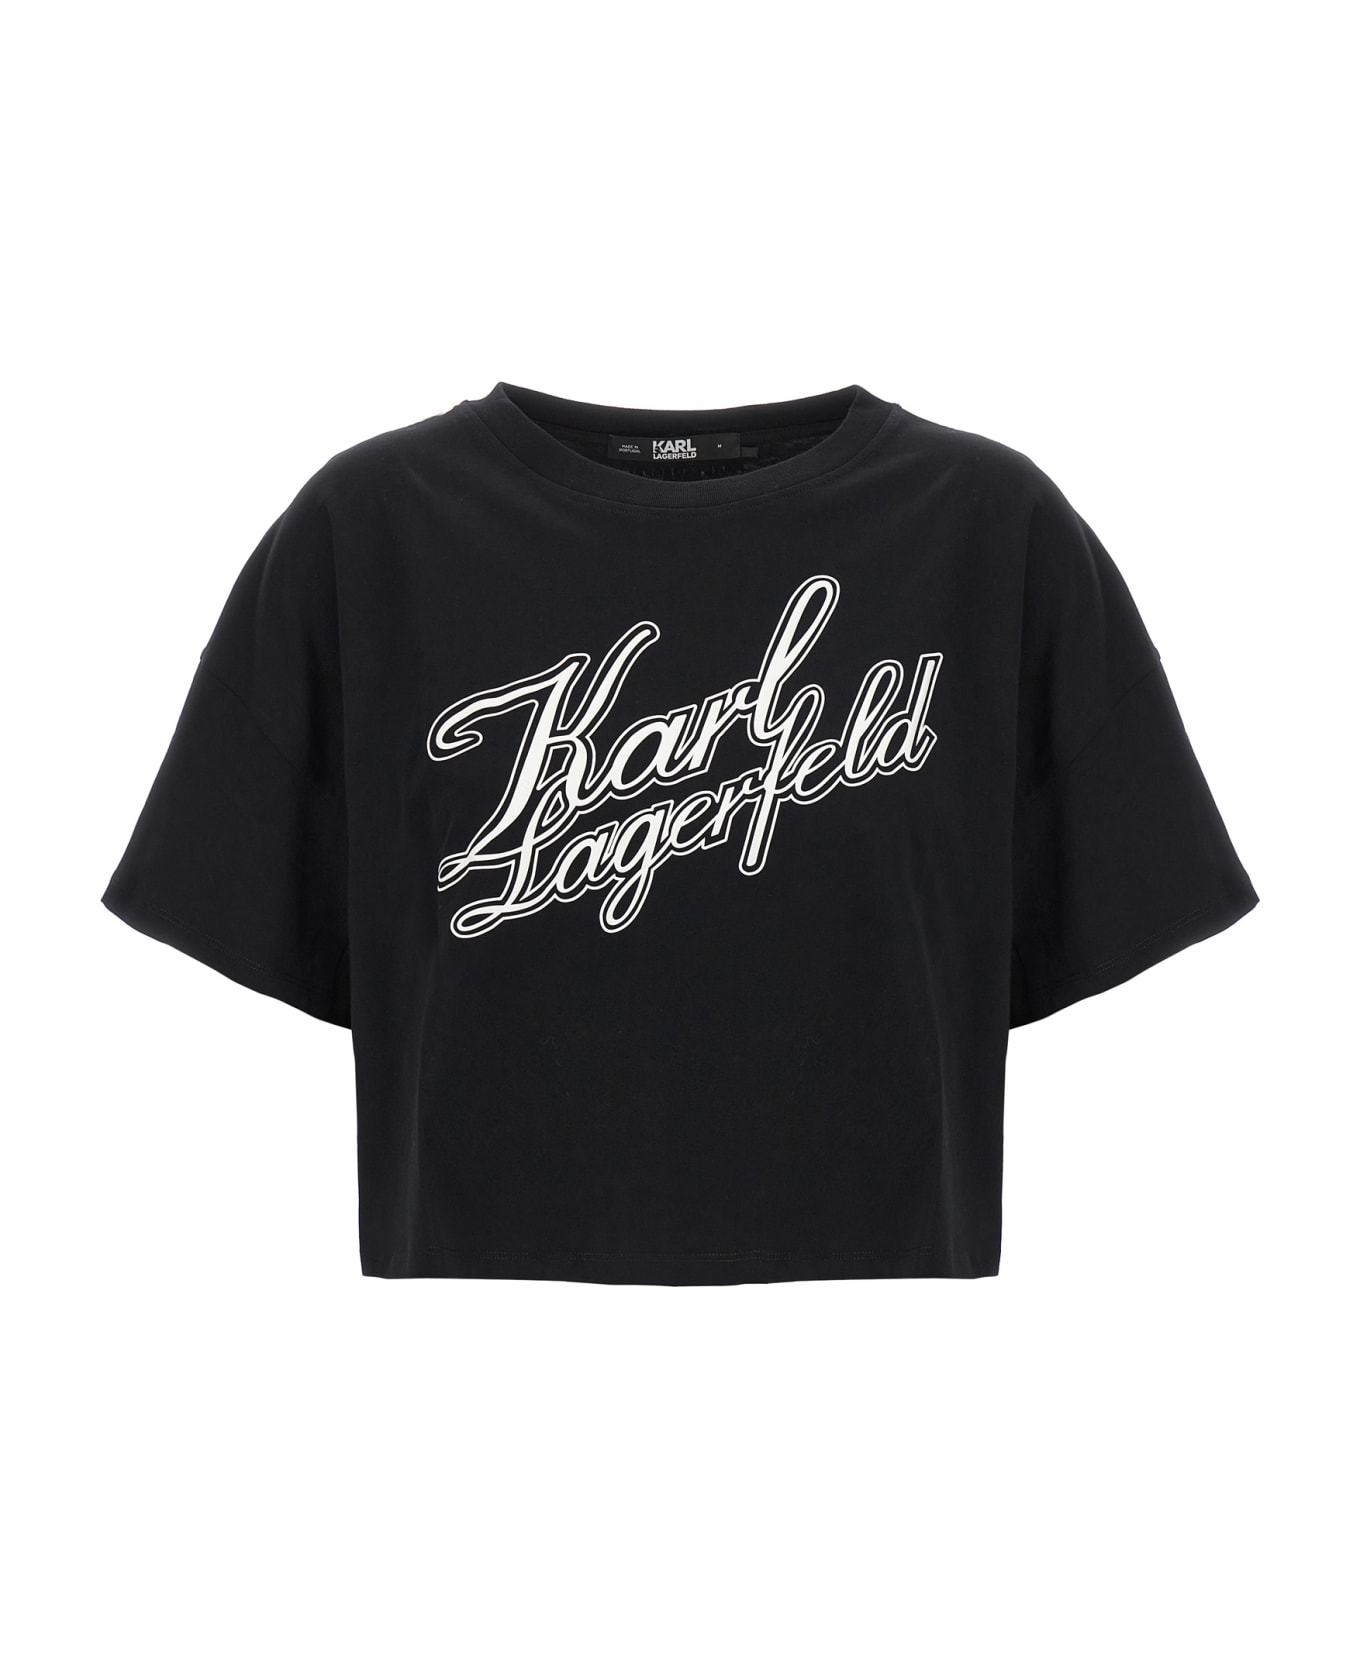 Karl Lagerfeld 'athleisure Cropped' T-shirt - White/Black Tシャツ